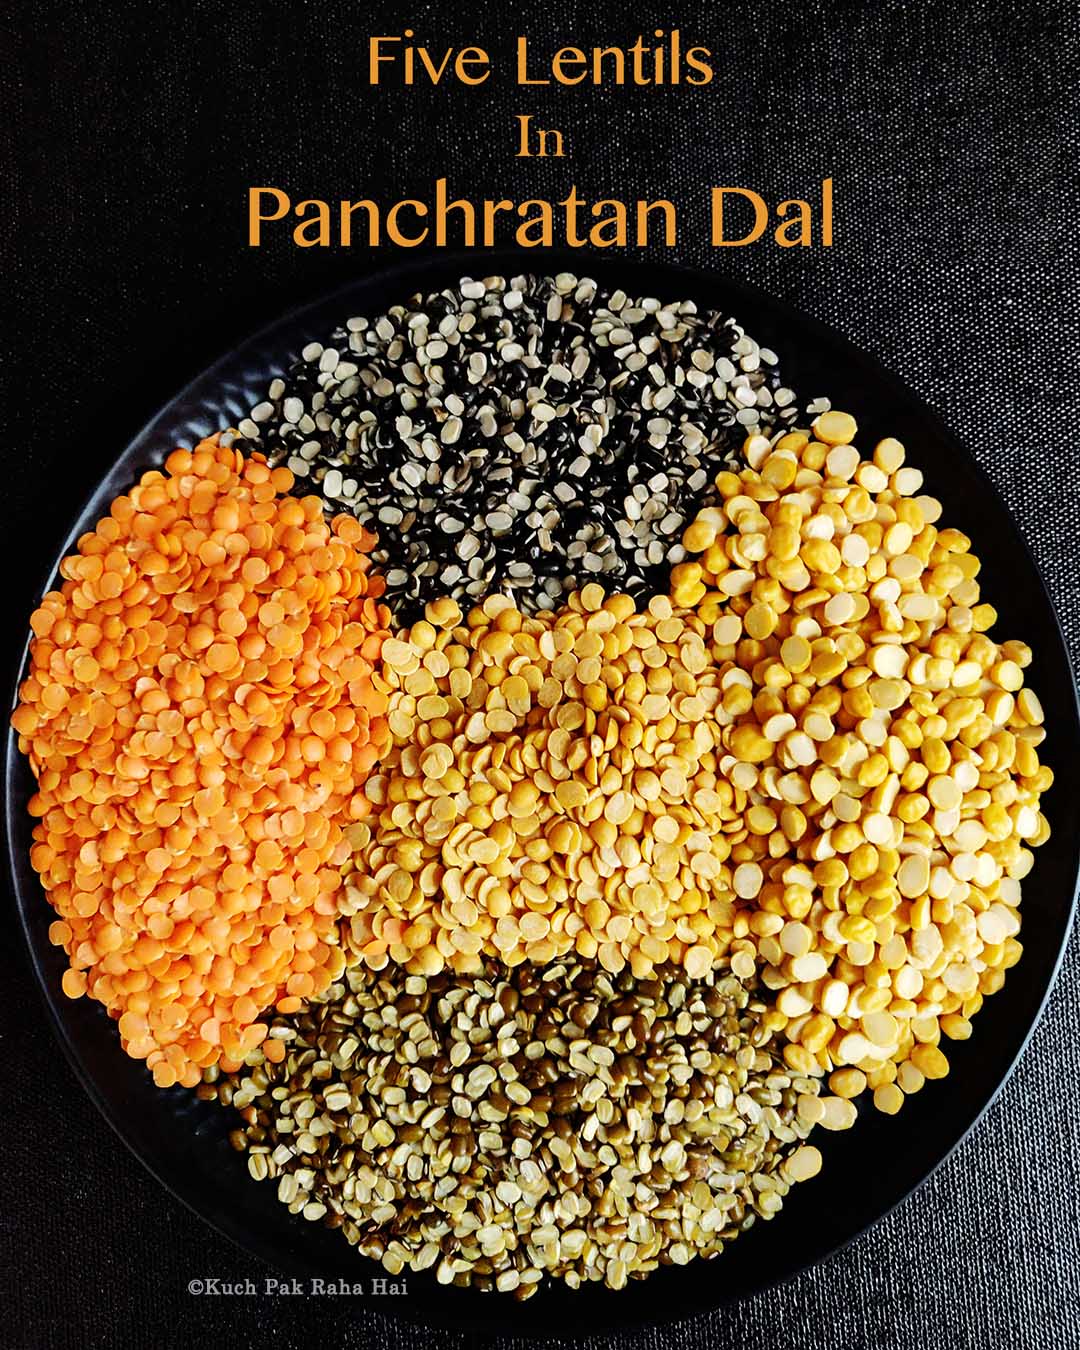 Five lentils or panch dal used in panchratna dal.